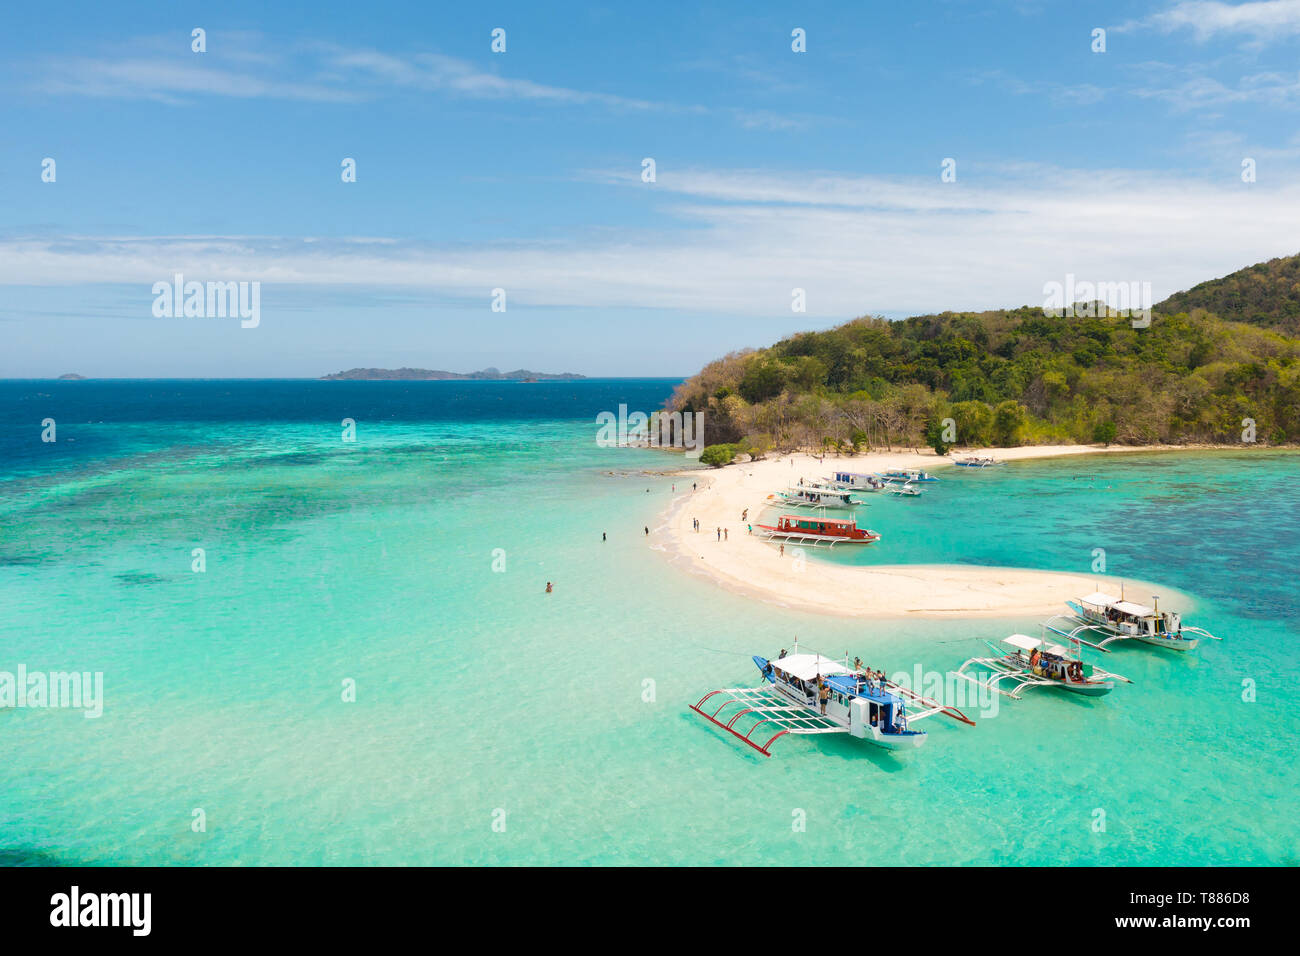 Aerial view tropical beach on island Ditaytayan. tropical island with ...